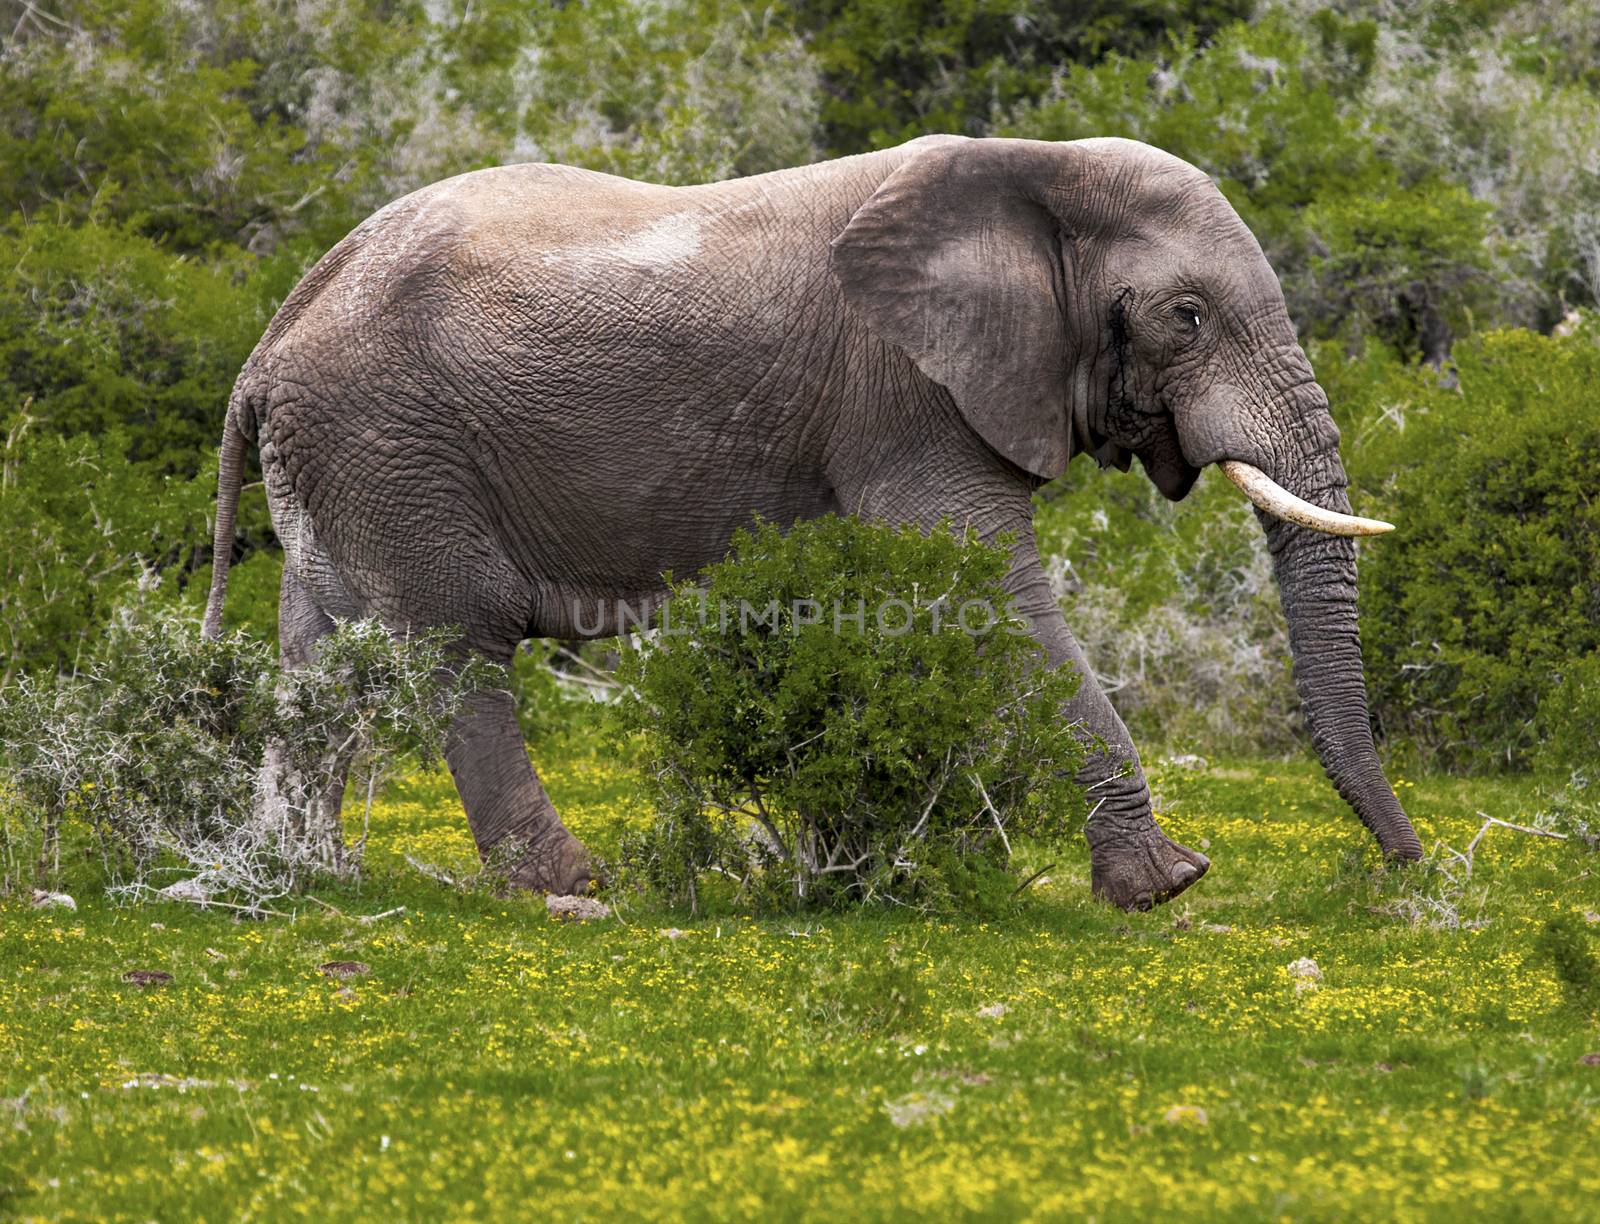 Elephant bull walking in a safari park in South Africa.